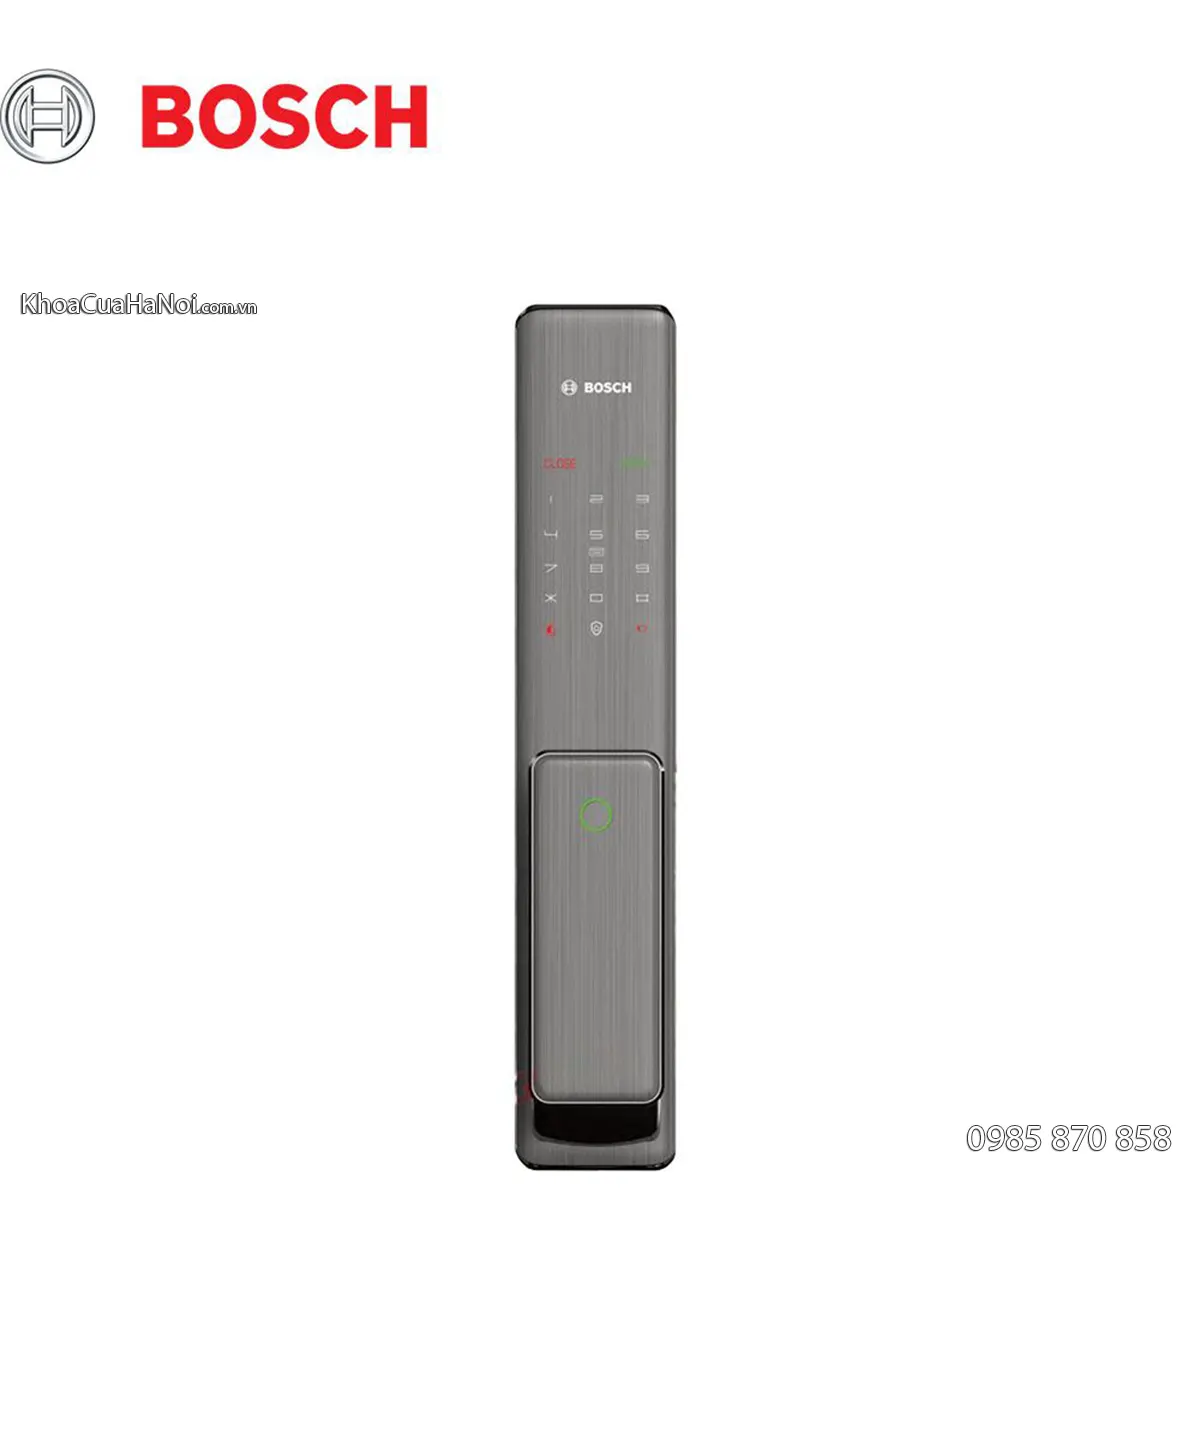 Bosch FU780